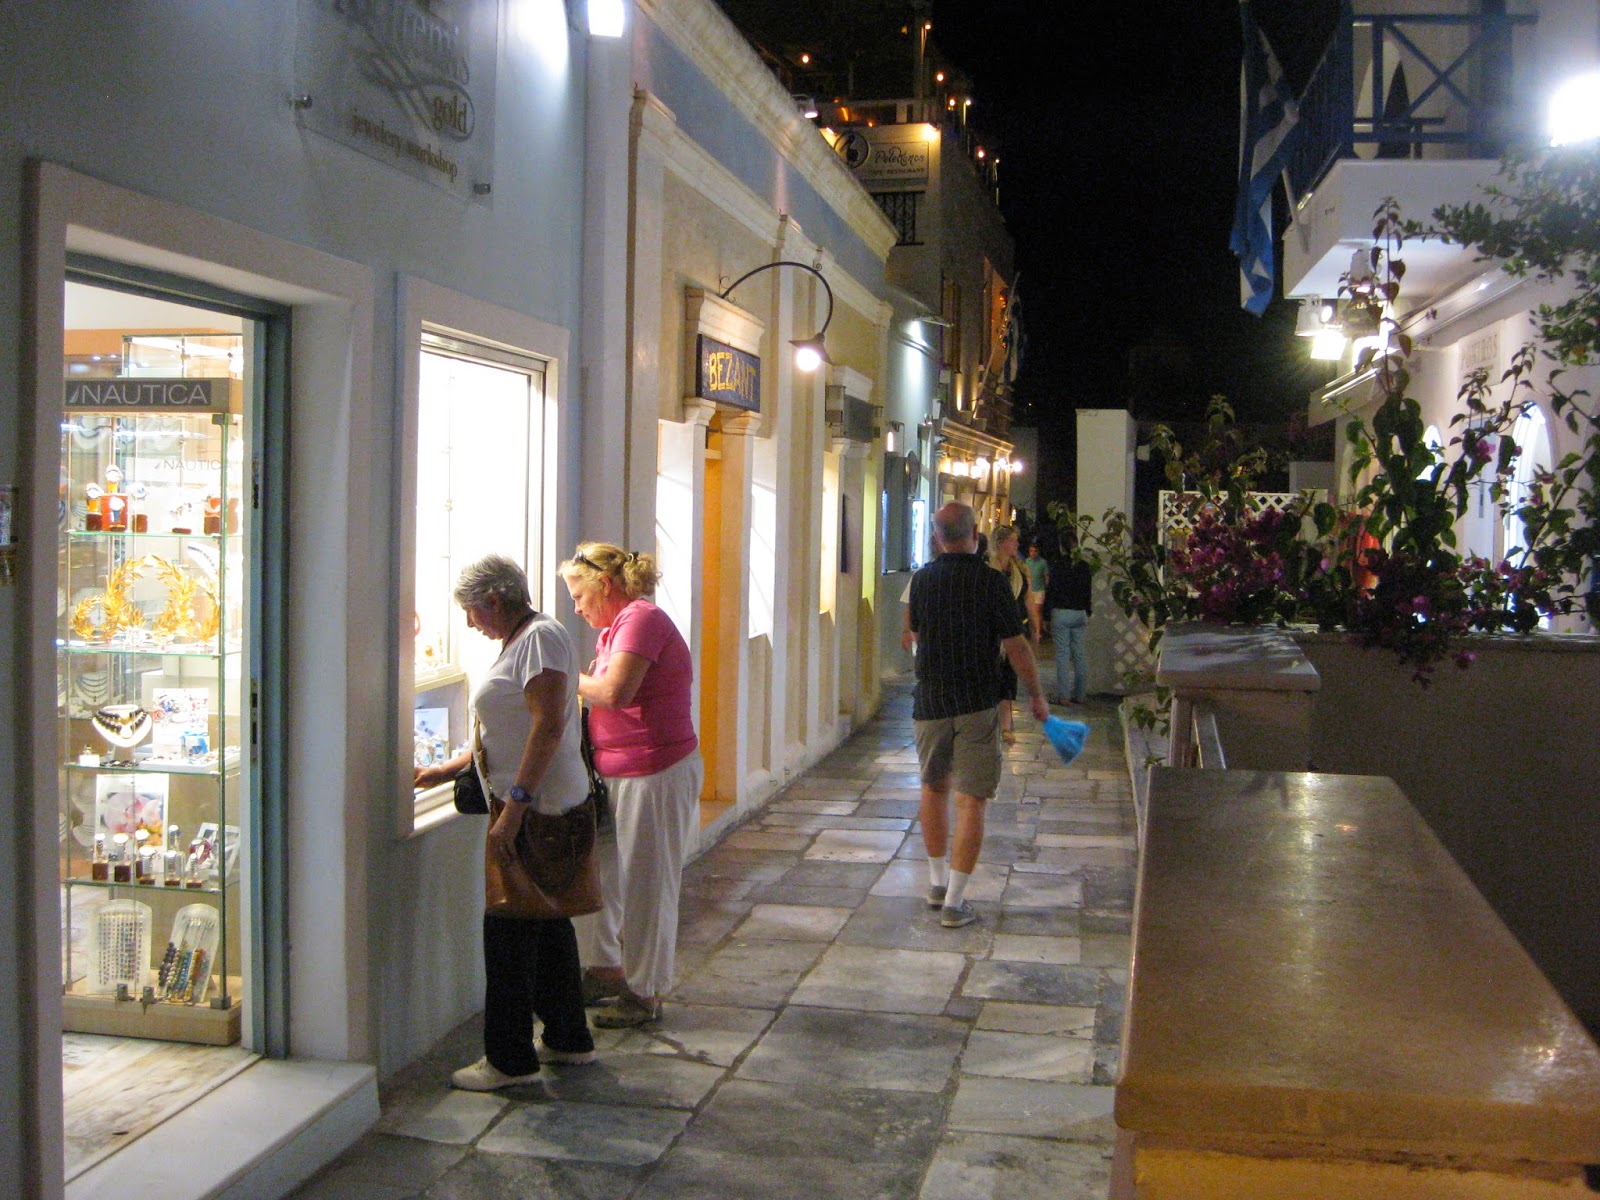 Santorini - Shops and restaurants along the main walk way in Oia